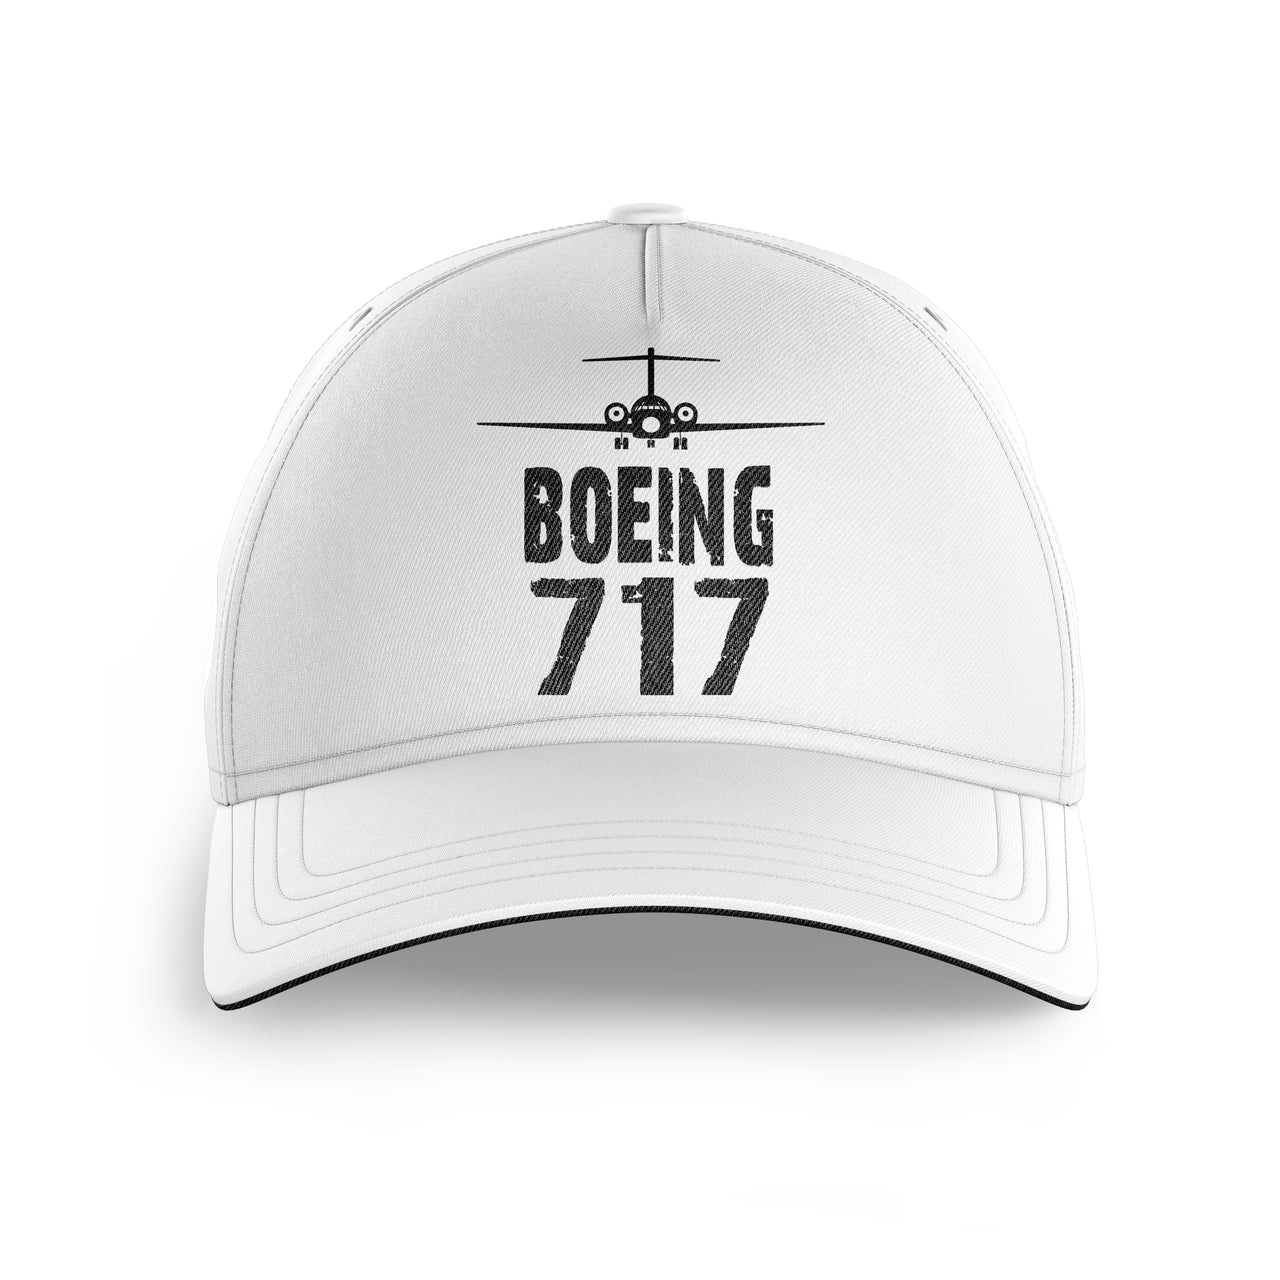 Boeing 717 & Plane Printed Hats